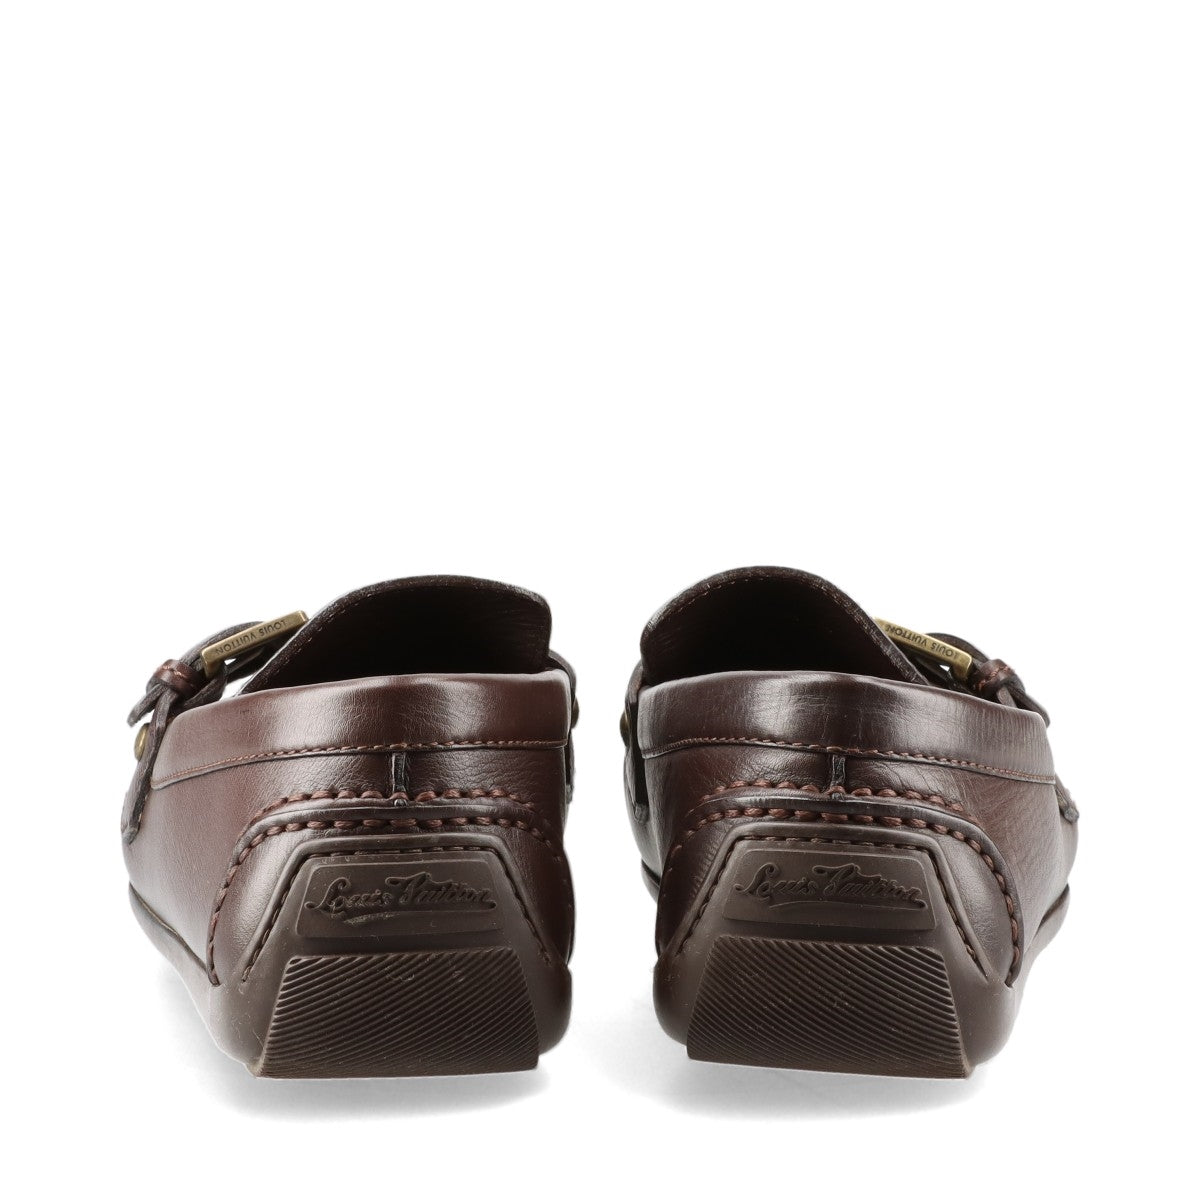 Louis Vuitton 05 Leather Driving shoes 7 Men's Brown FA0095 Single monk strap